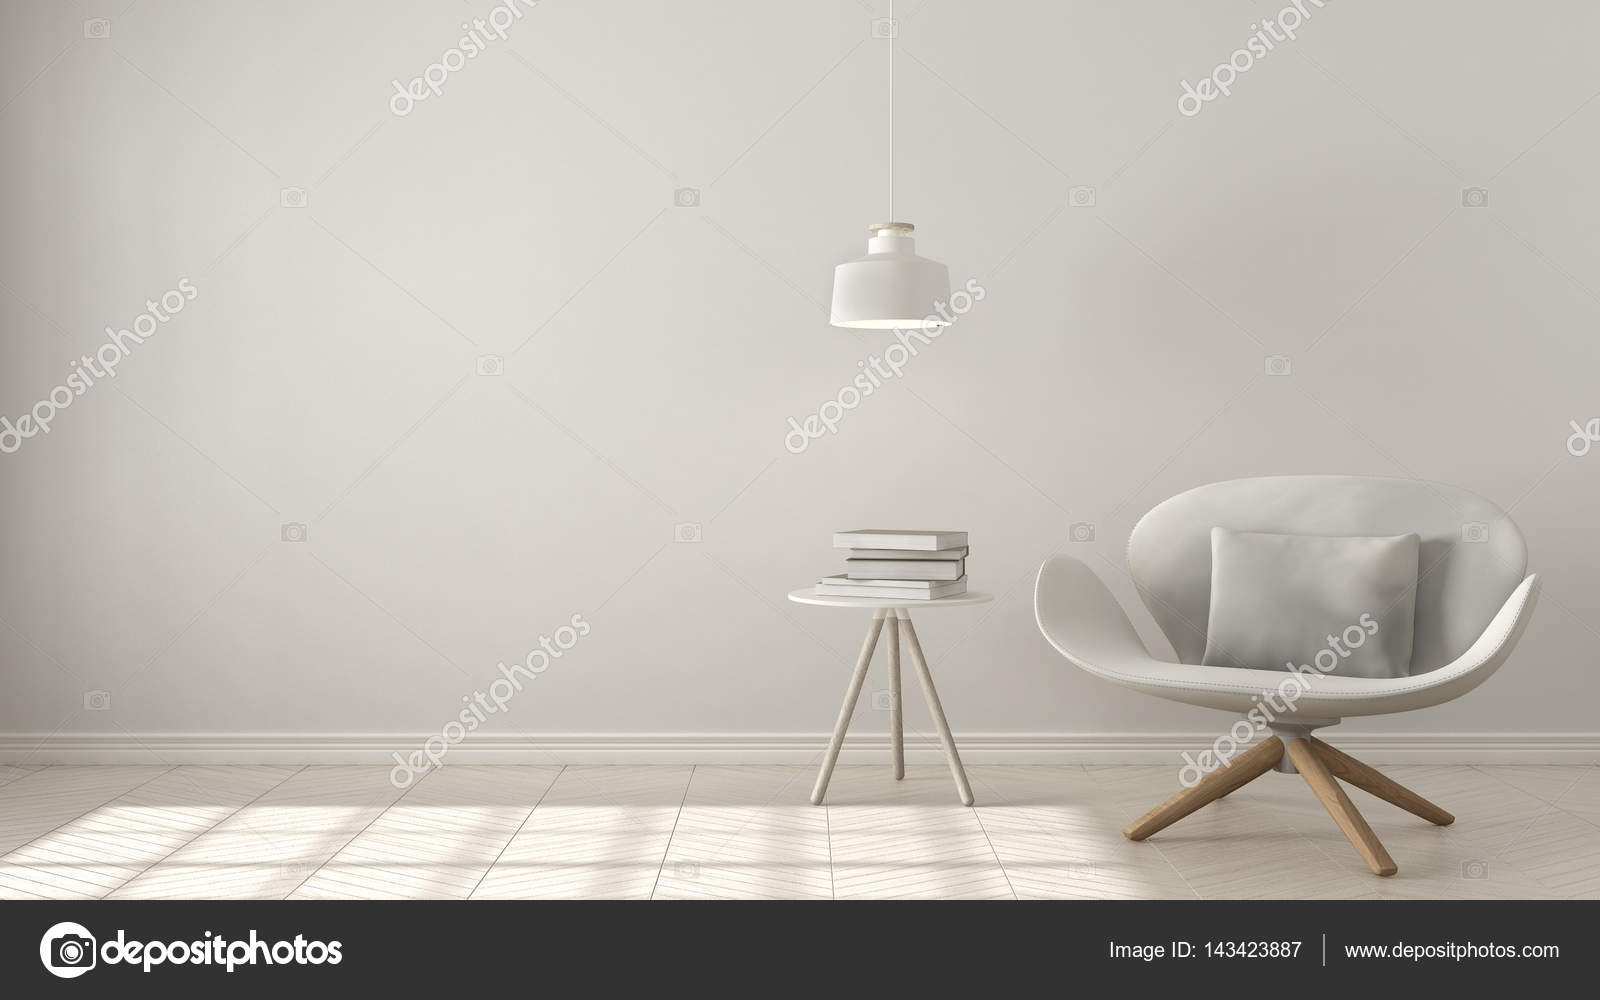 İskandinav minimalist arka plan, beyaz koltuk tablo ile Stok